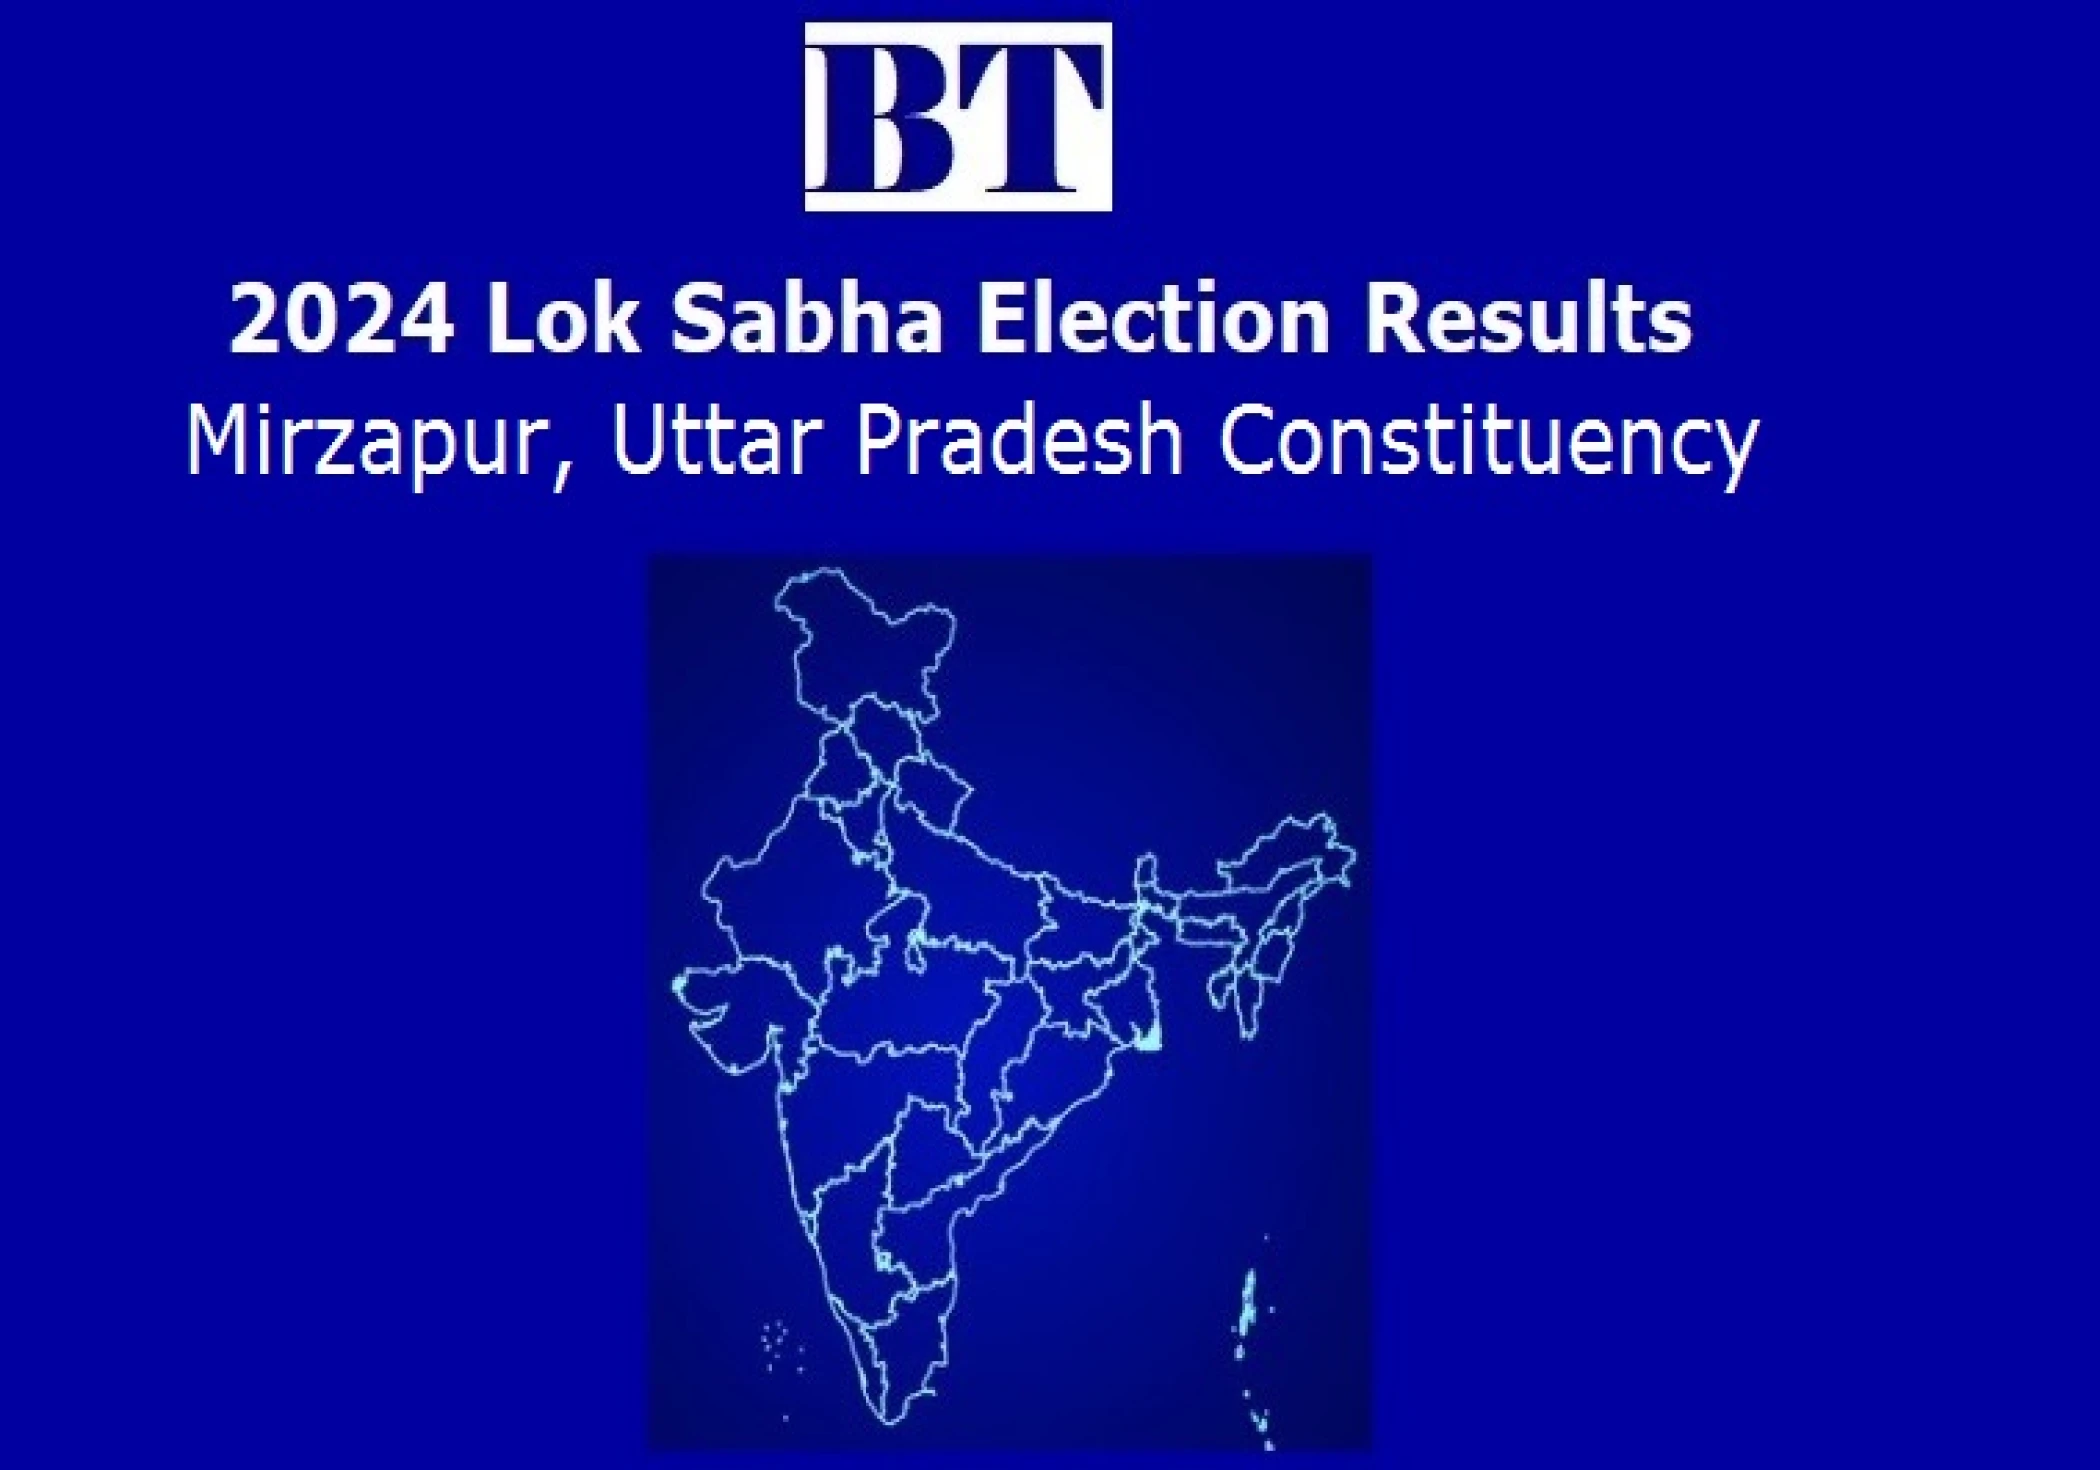 Mirzapur Constituency Lok Sabha Election Results 2024